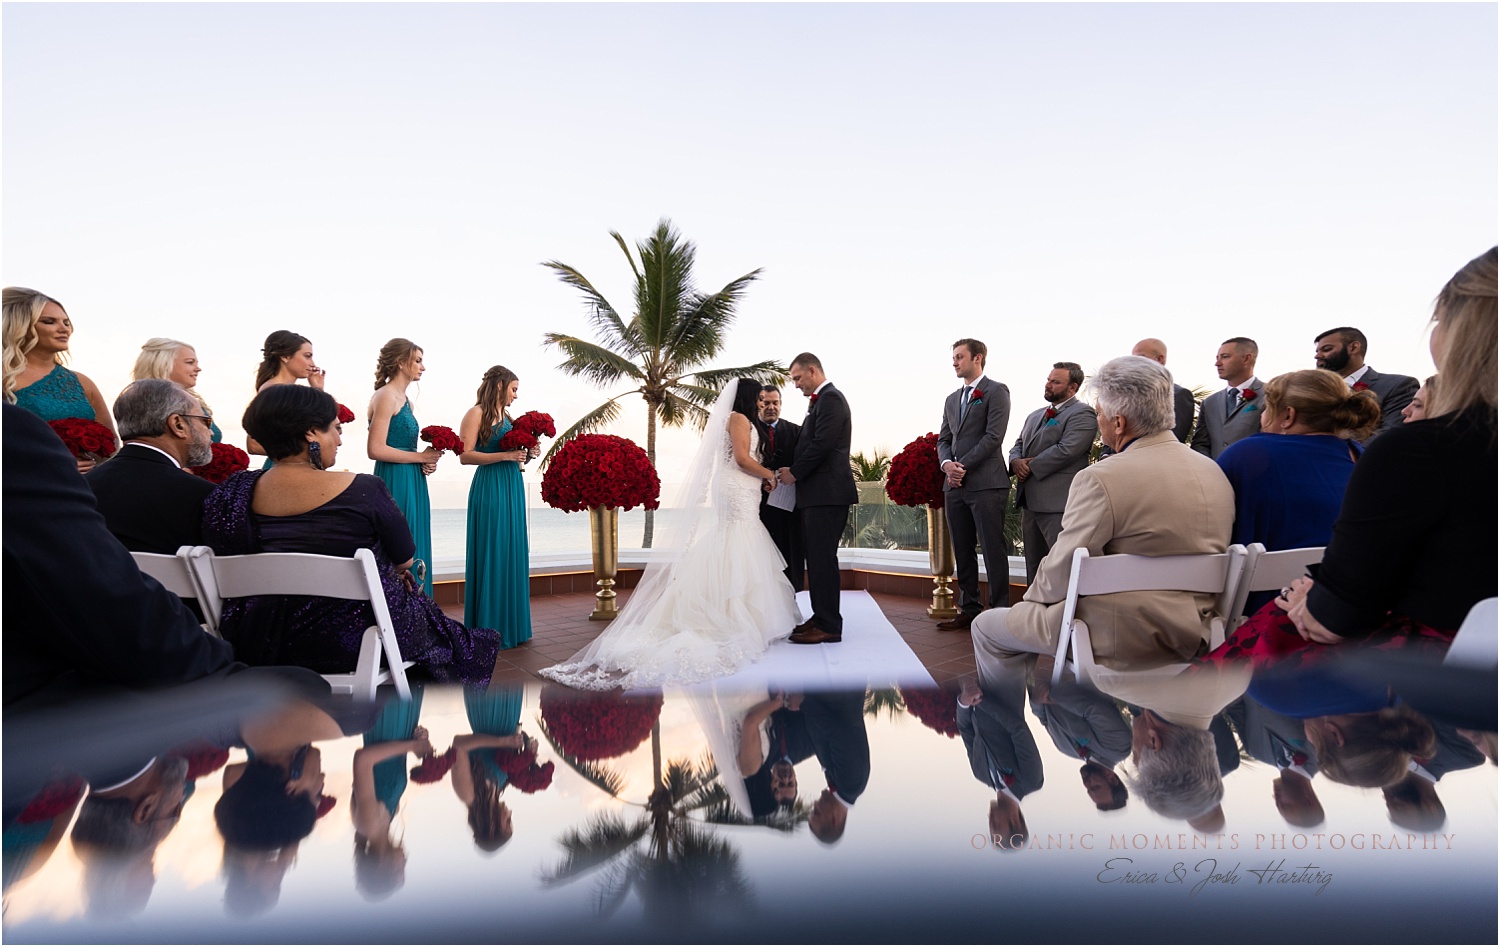 Pelican grand beach resort wedding organic moments photography 